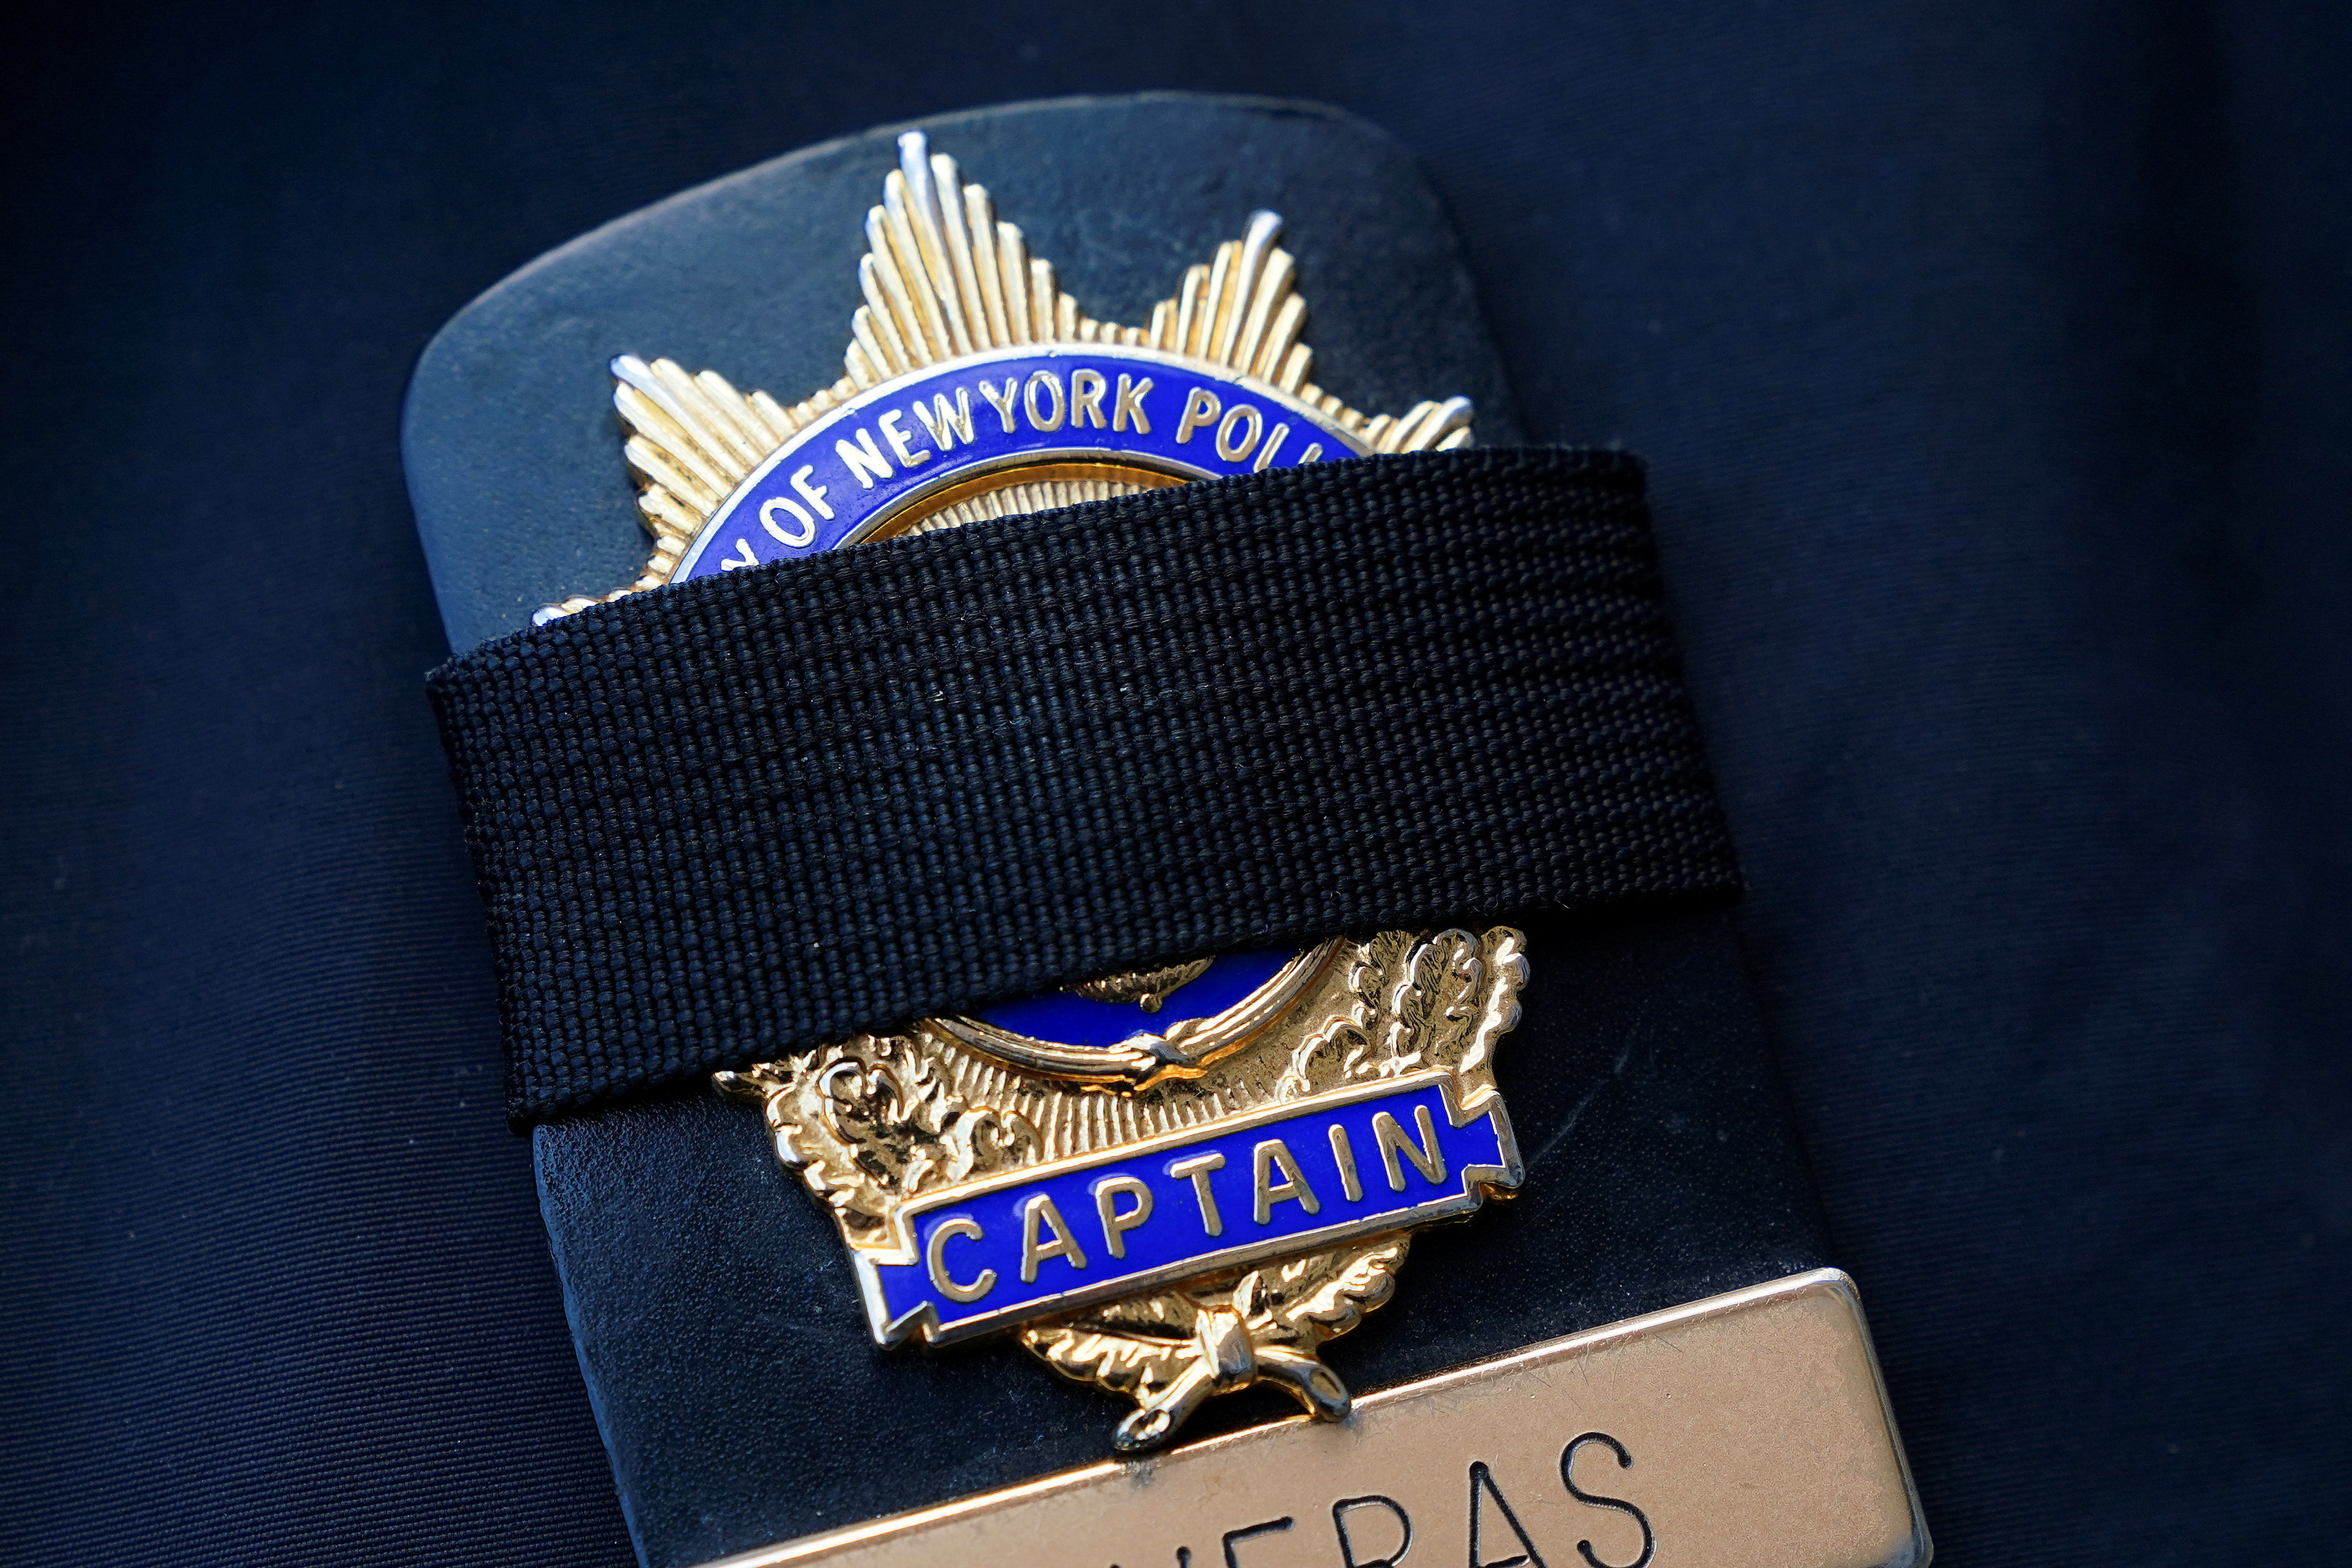 California Badges for Sale / Trade - Dan's California Police